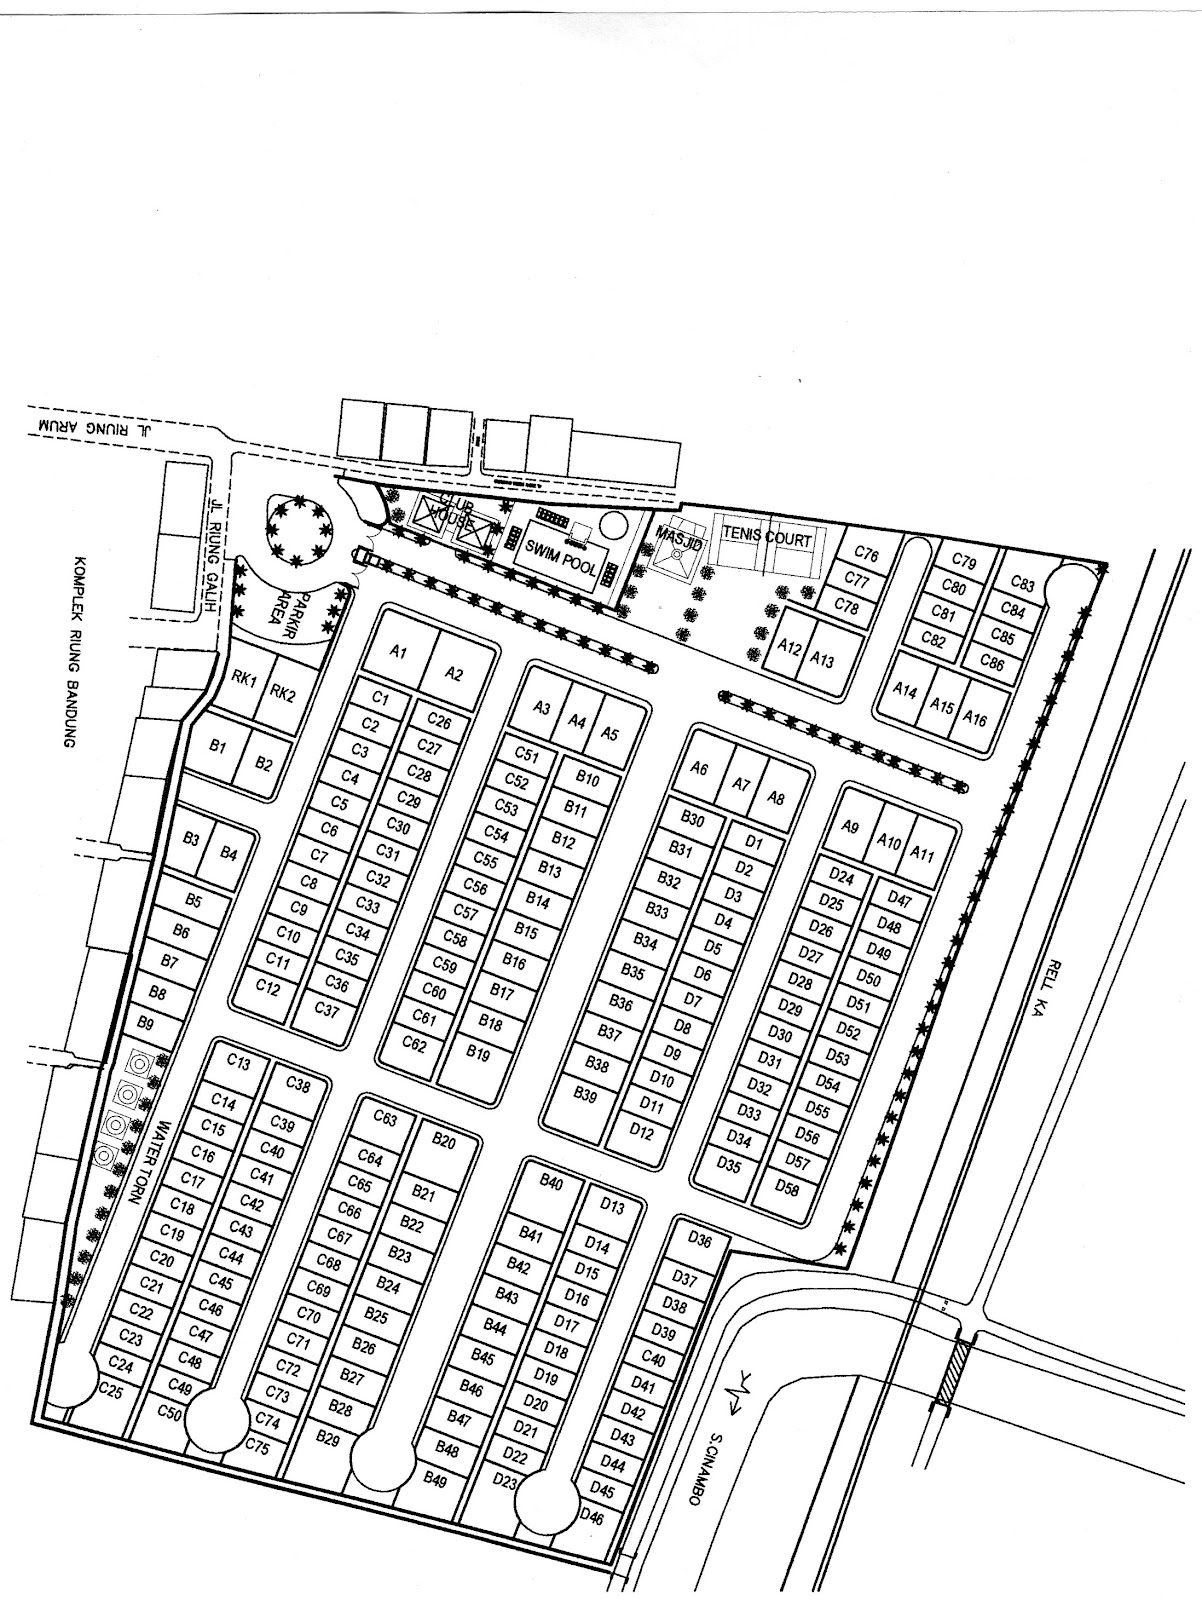 Billabong Soeta Residence: Site Plan